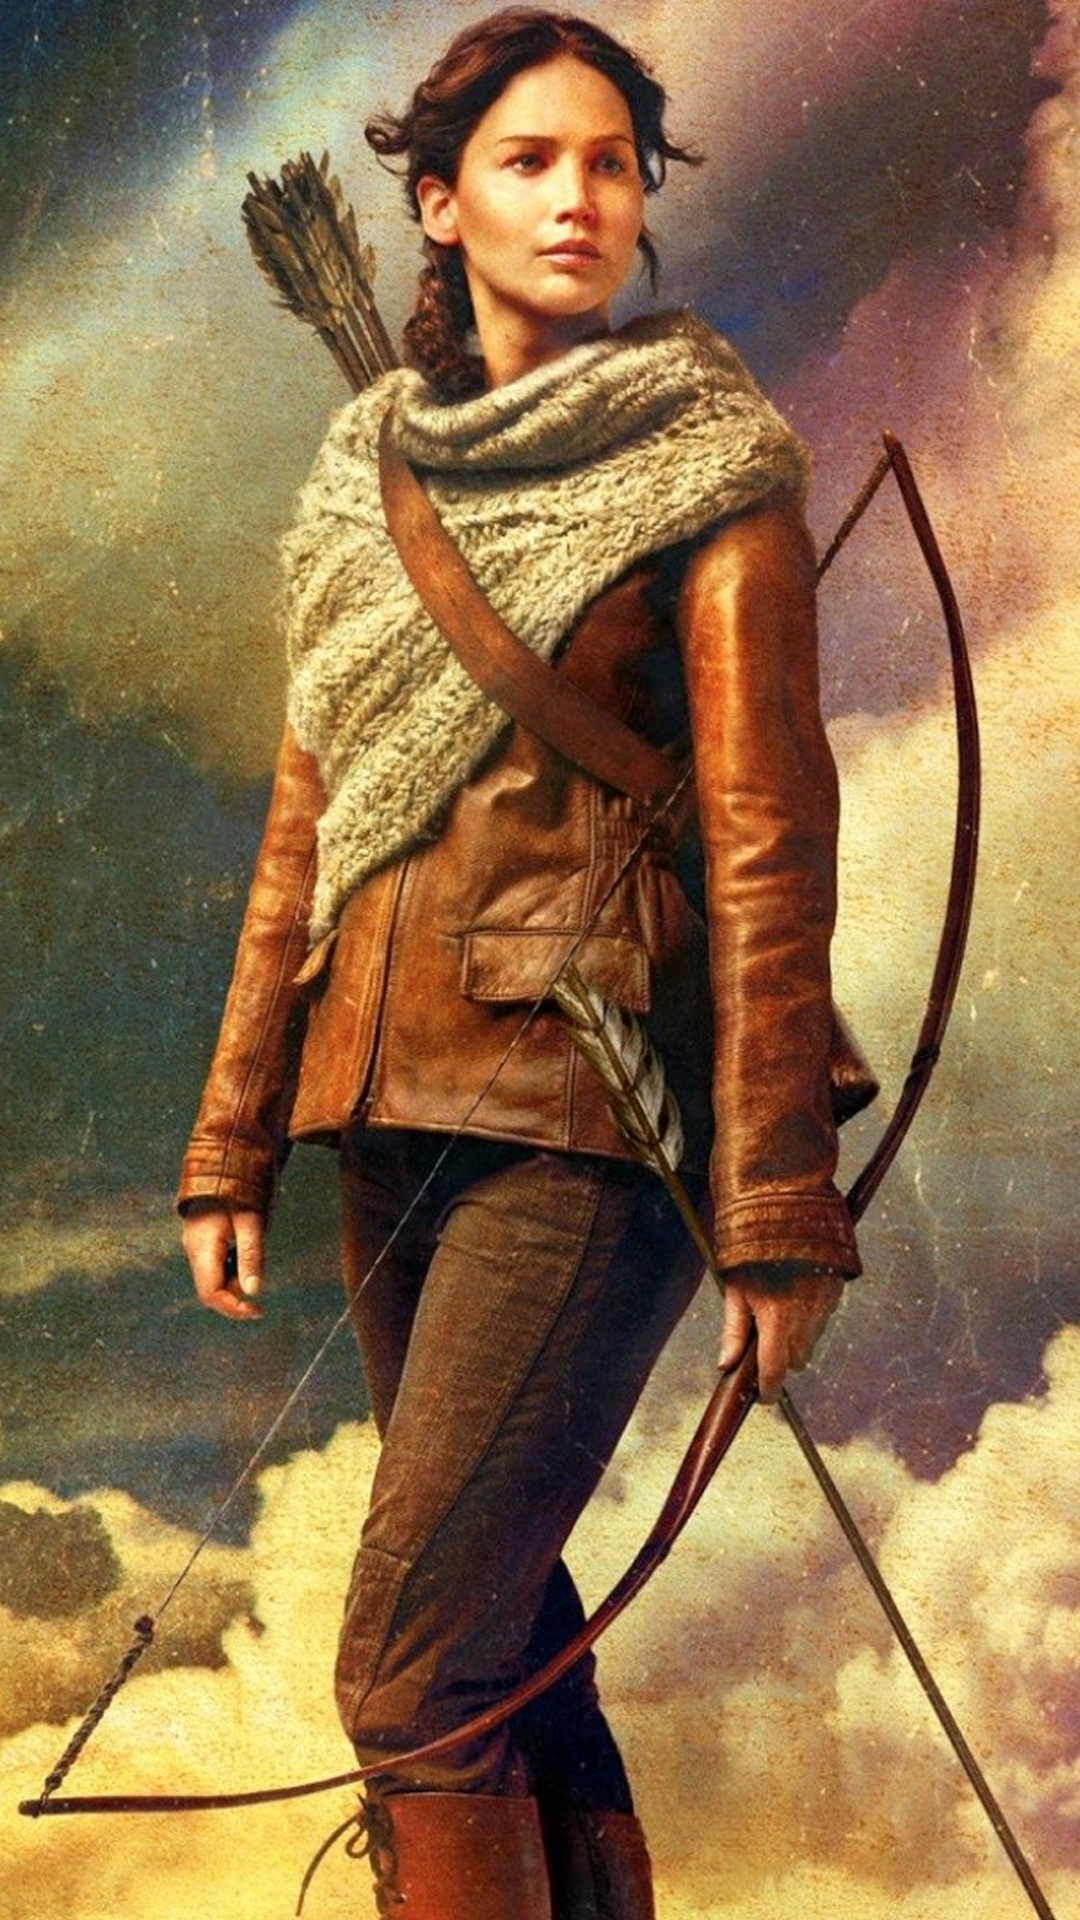 Catching Fire - Katniss Everdeen, Entertainment Backgrounds, wallpapers for Samsung Galaxy S4, fondos galaxy s4, fondos de pantalla galaxy s4, sfondi samsung galaxy s4, hintergrund HD 1080x1920